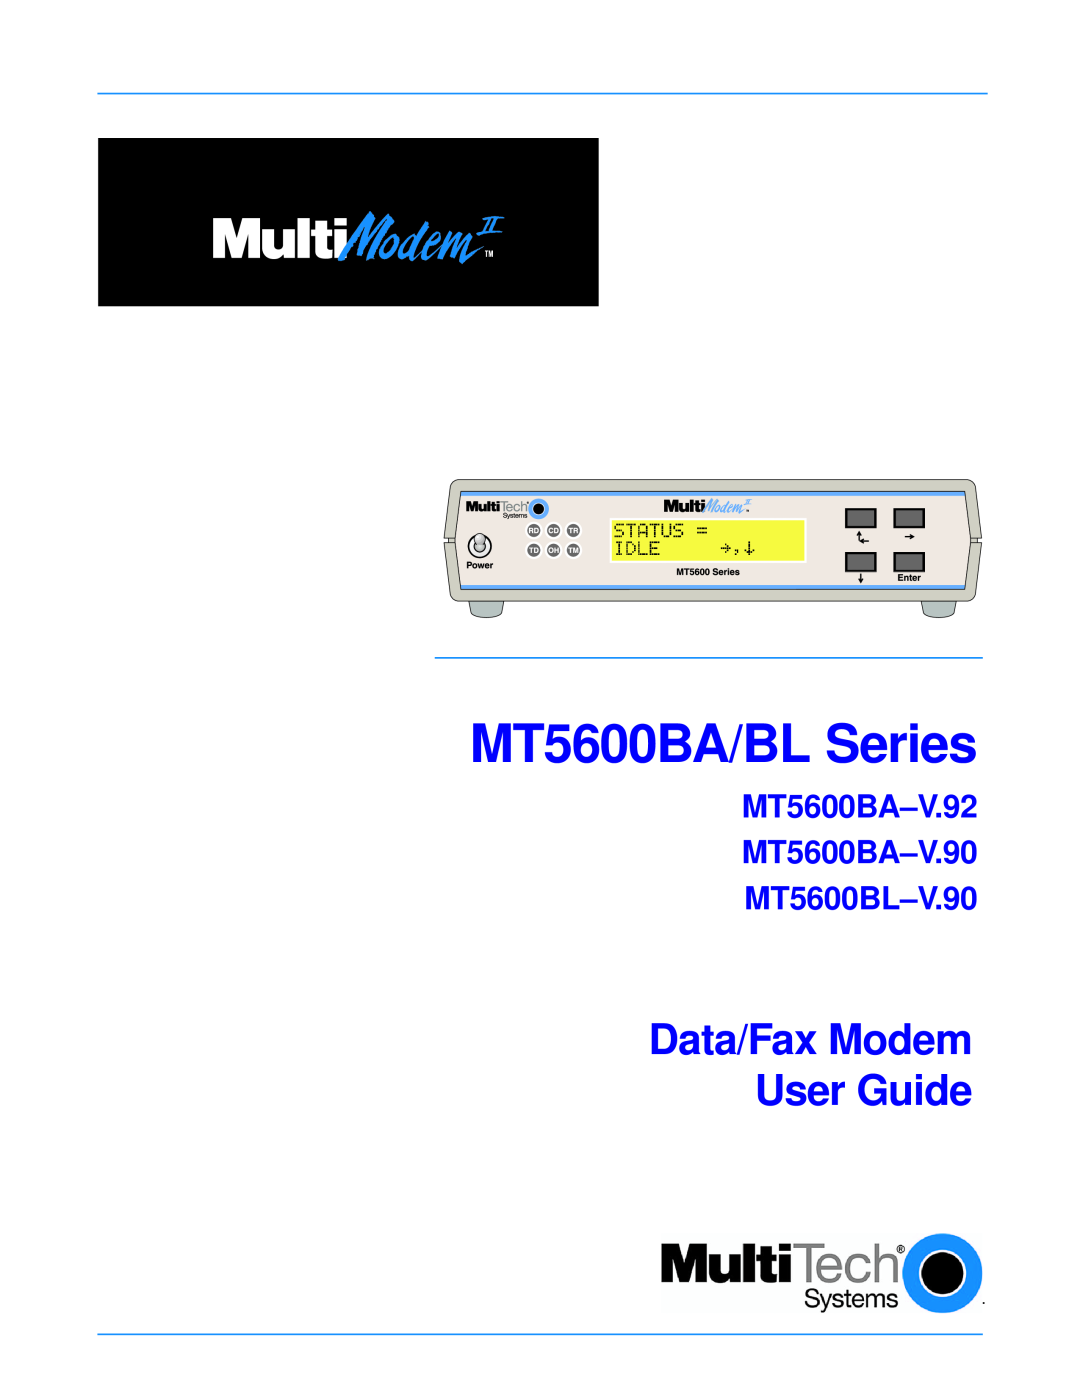 Multitech manual MT5600BA/BL Series, Data/Fax Modem User Guide, MT5600BA-V.92 MT5600BA-V.90 MT5600BL-V.90 